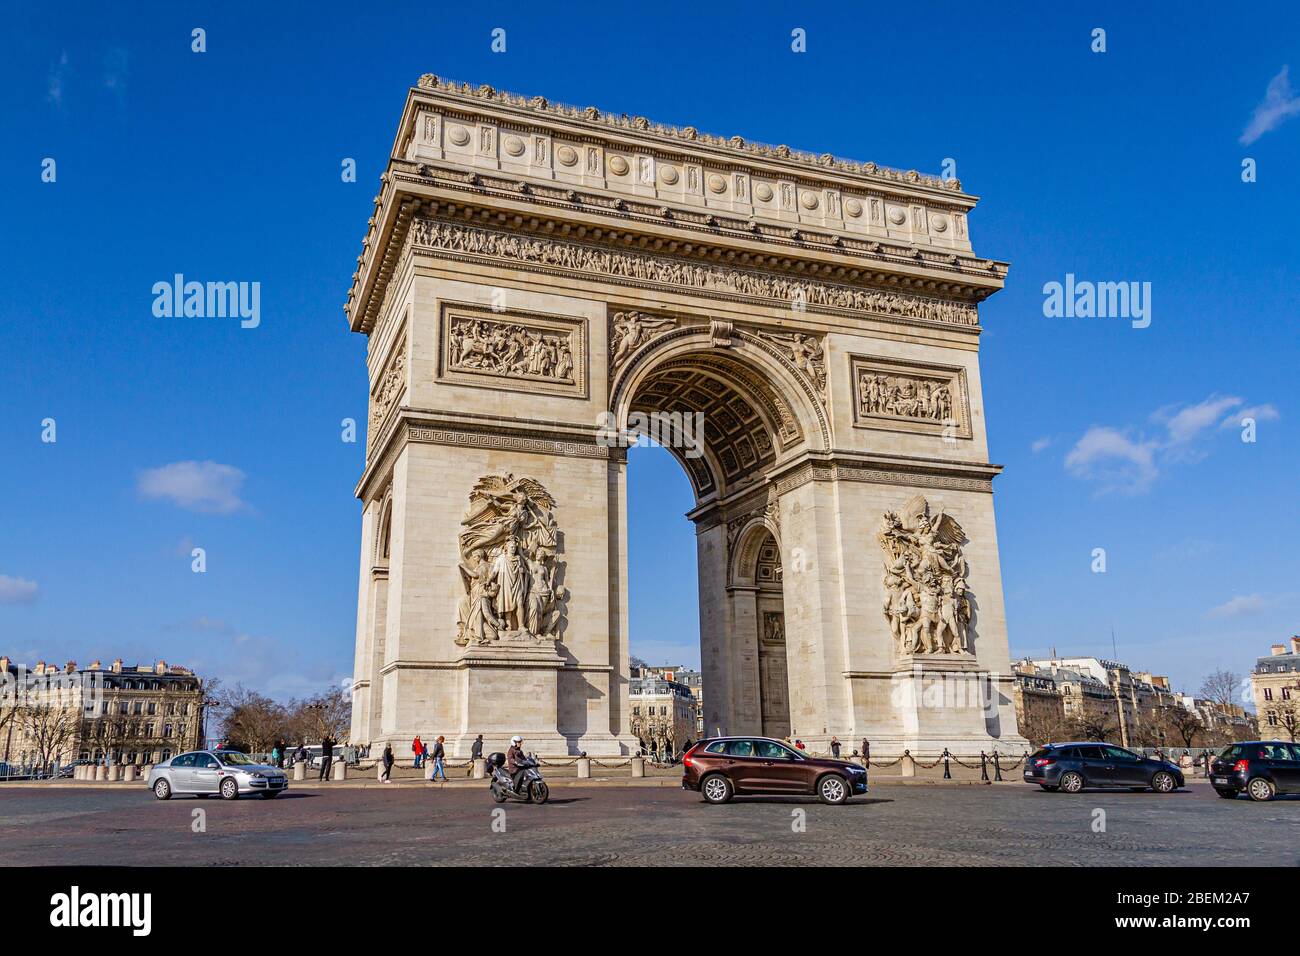 The Arc de Triomphe, a major monument on Place Charles de Gaulle, Paris, France. February 2020. Stock Photo